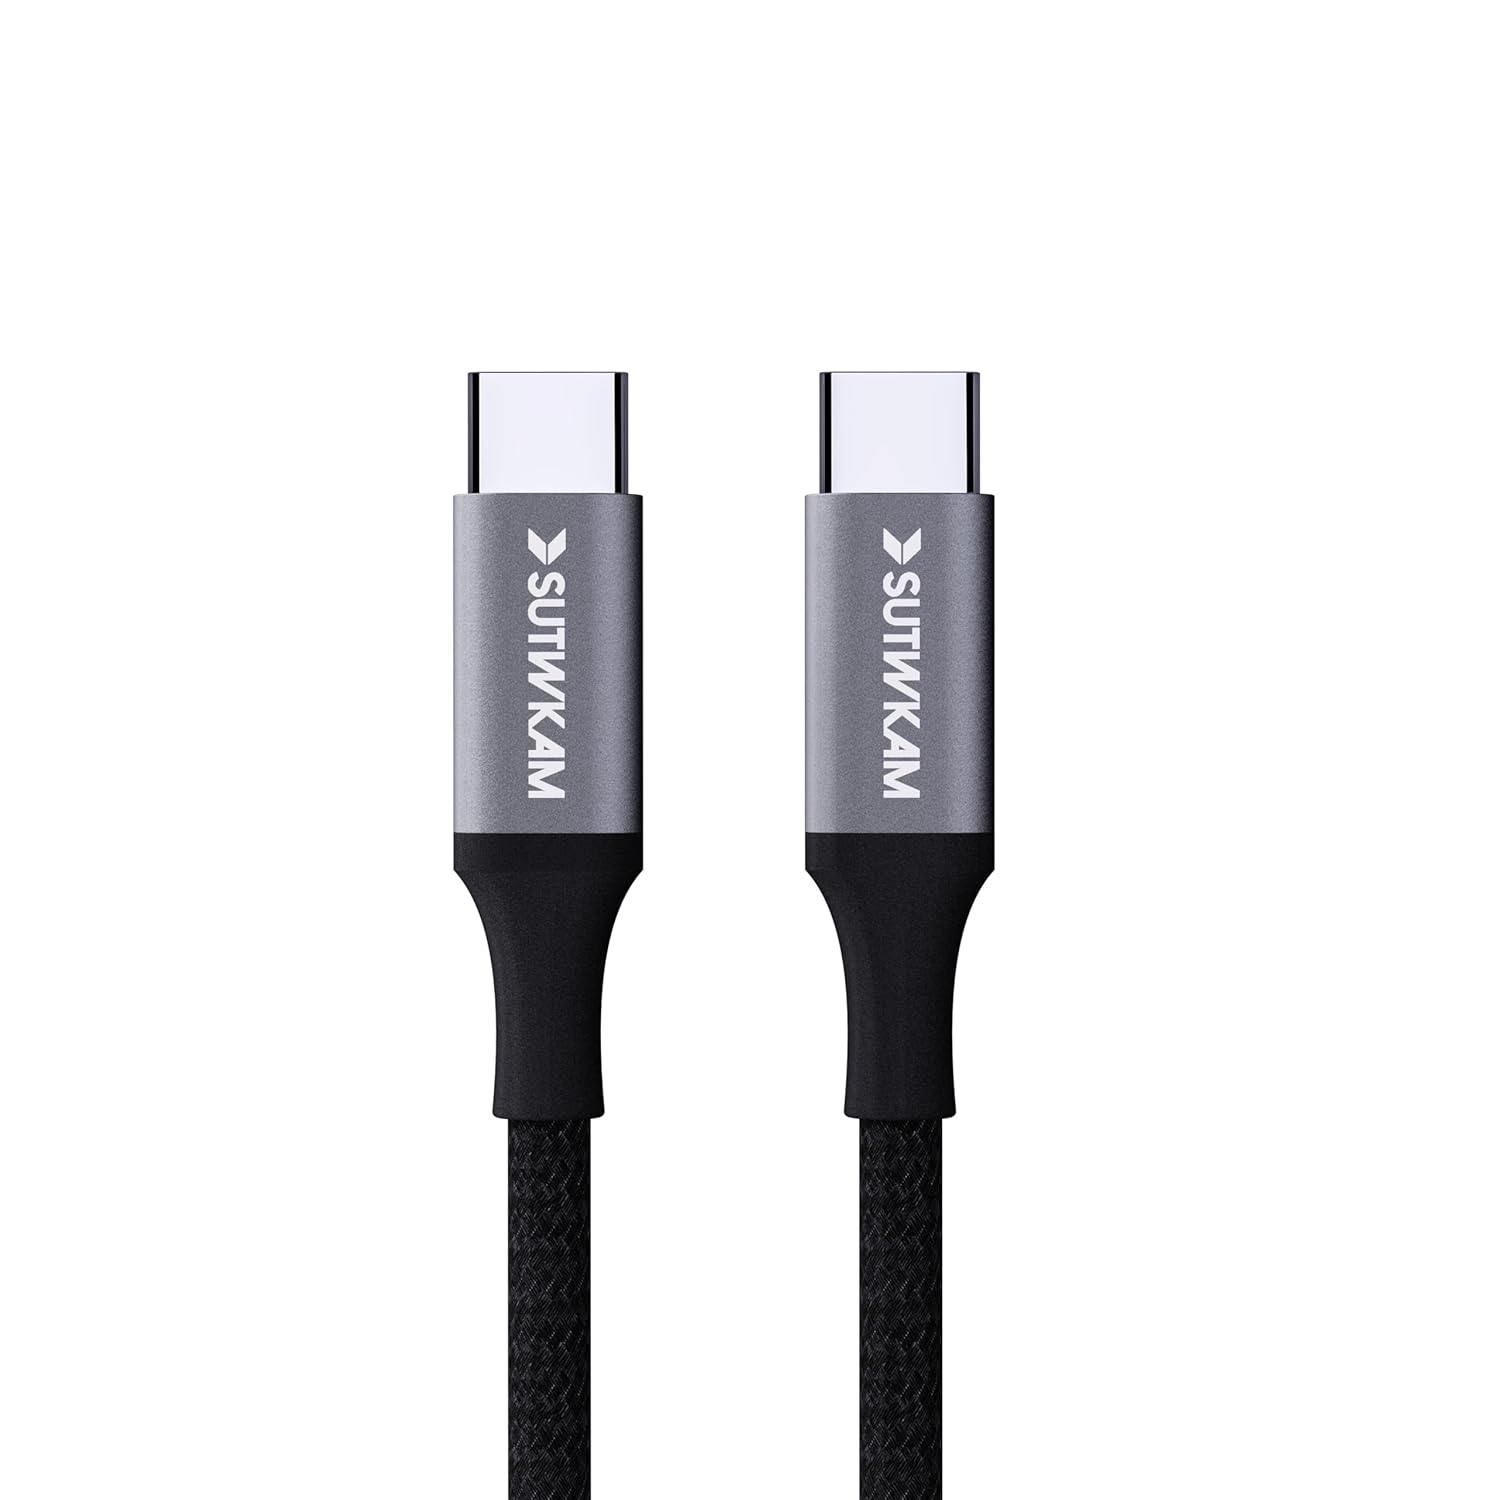 SUTWKAM USB C Cable Heavy Duty